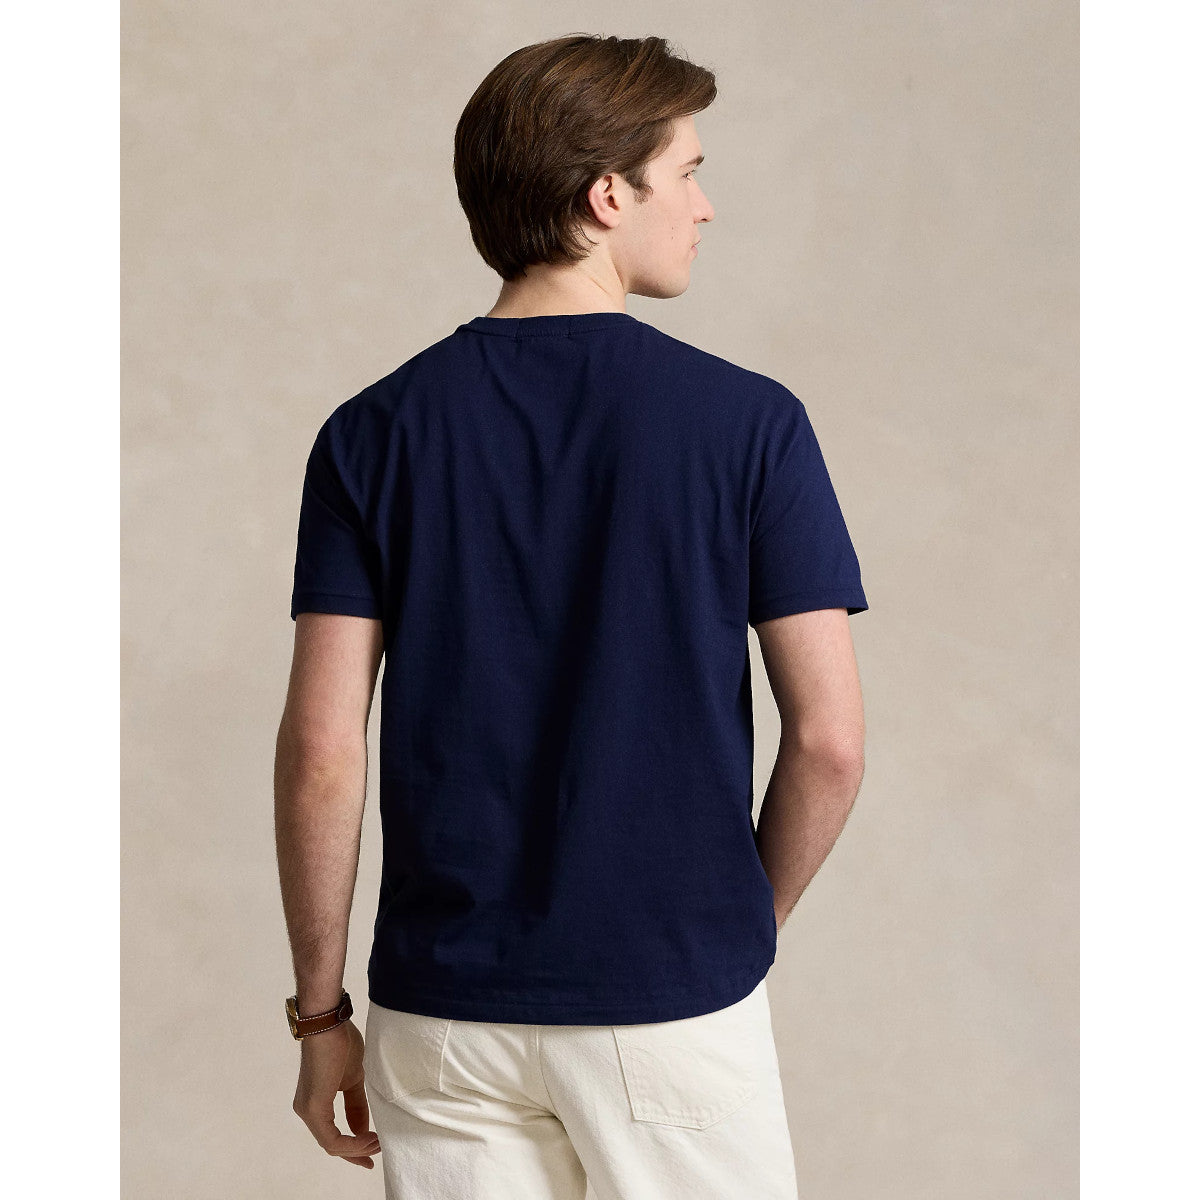 Polo Ralph Lauren Heritage Bear T-Shirt 034 Newport Navy